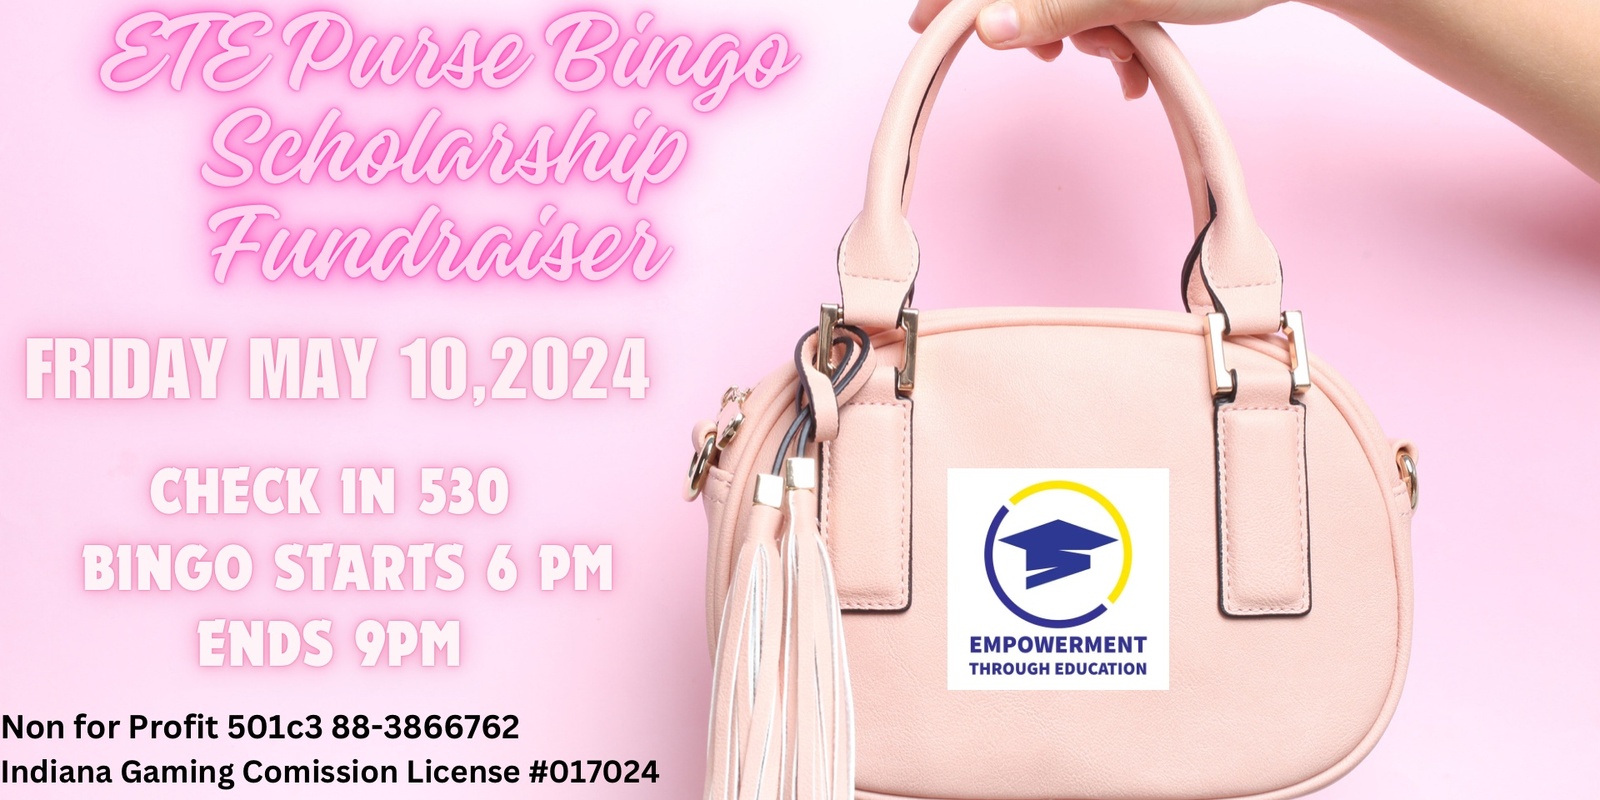 Banner image for Empowerment through Education Purse Bingo Scholarship Fundraiser